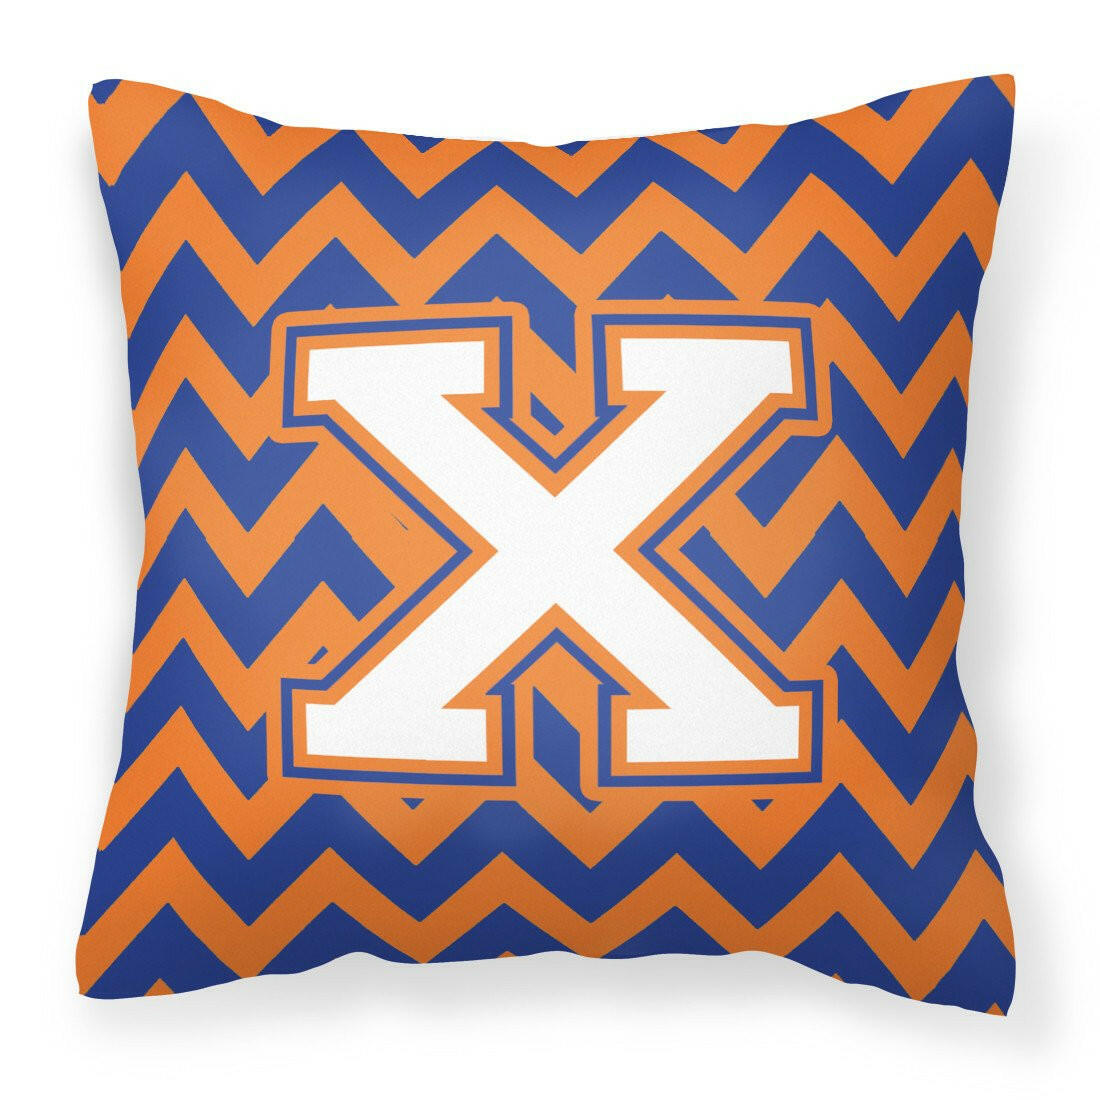 Letter X Chevron Blue and Orange #3 Fabric Decorative Pillow CJ1060-XPW1414 by Caroline's Treasures